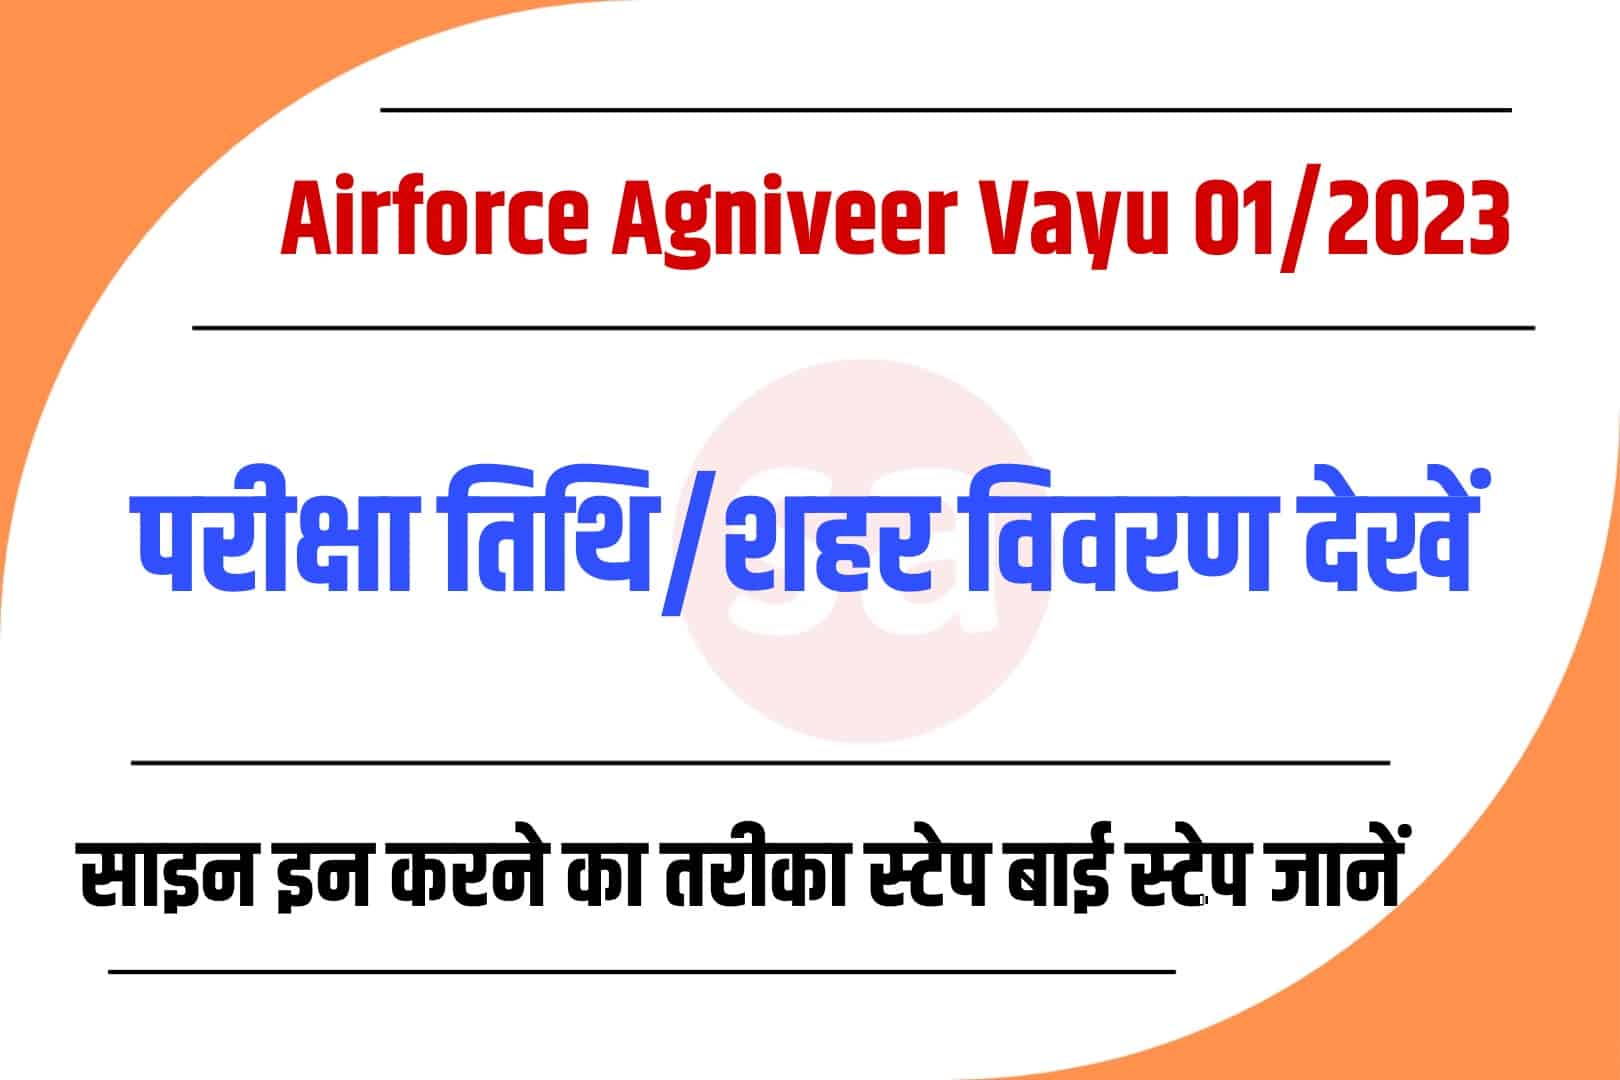 Airforce Agniveer Vayu 01/2023 Exam Date / City Details | भारतीय वायु सेना अग्निवीर परीक्षा शहर विवरण